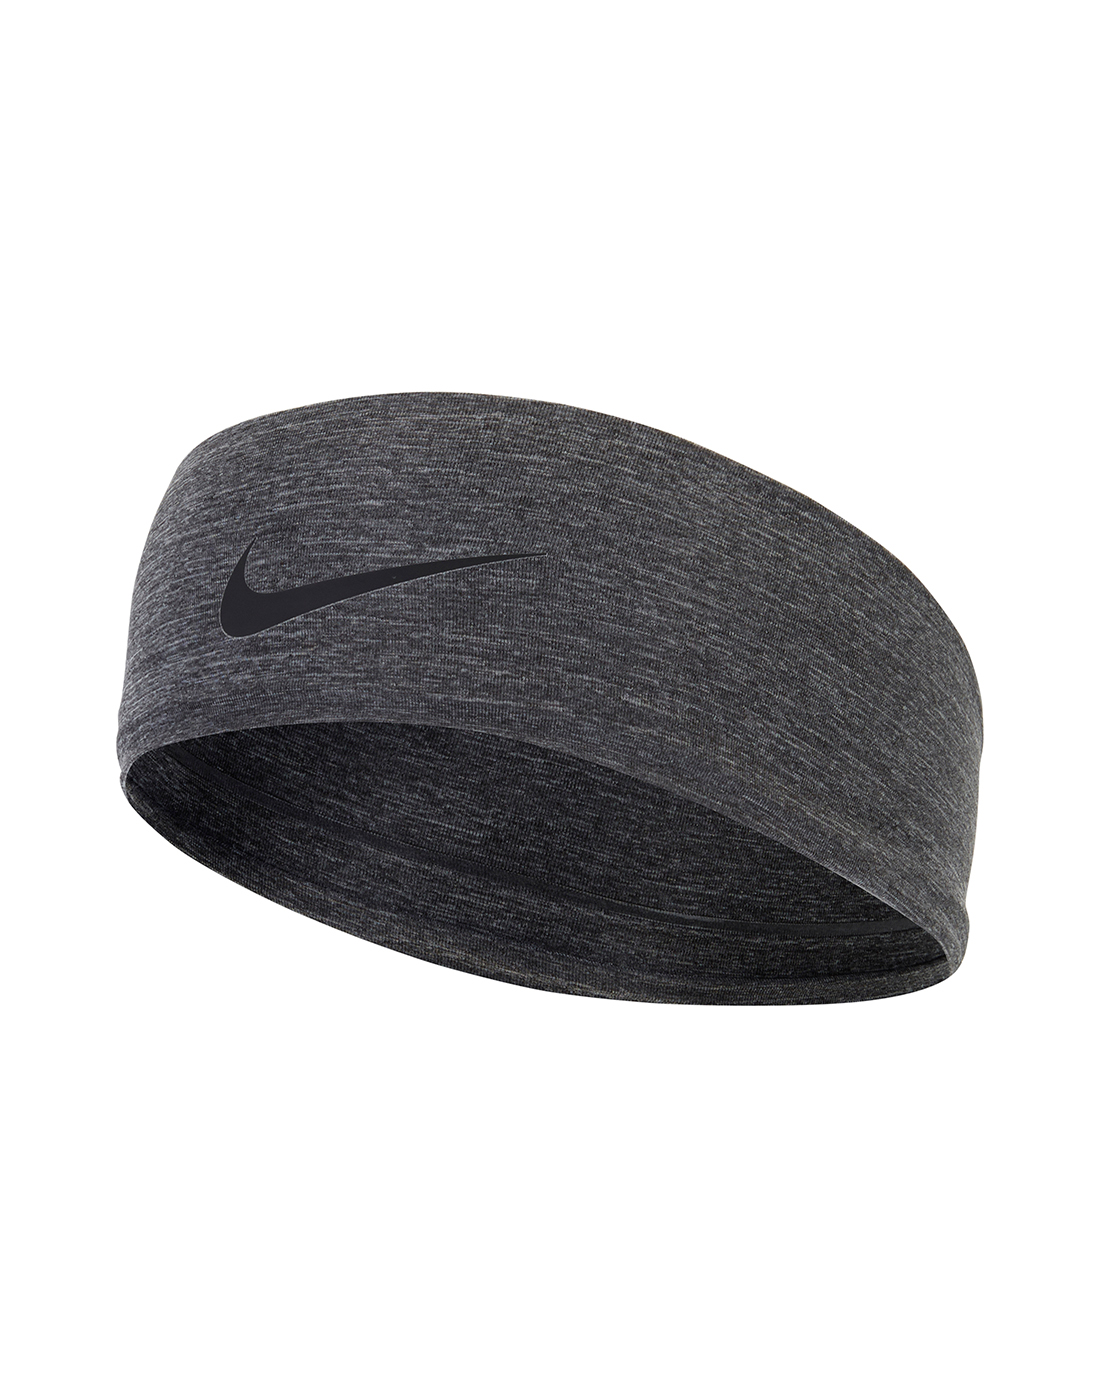 Fury 2.0 Headband by Nike